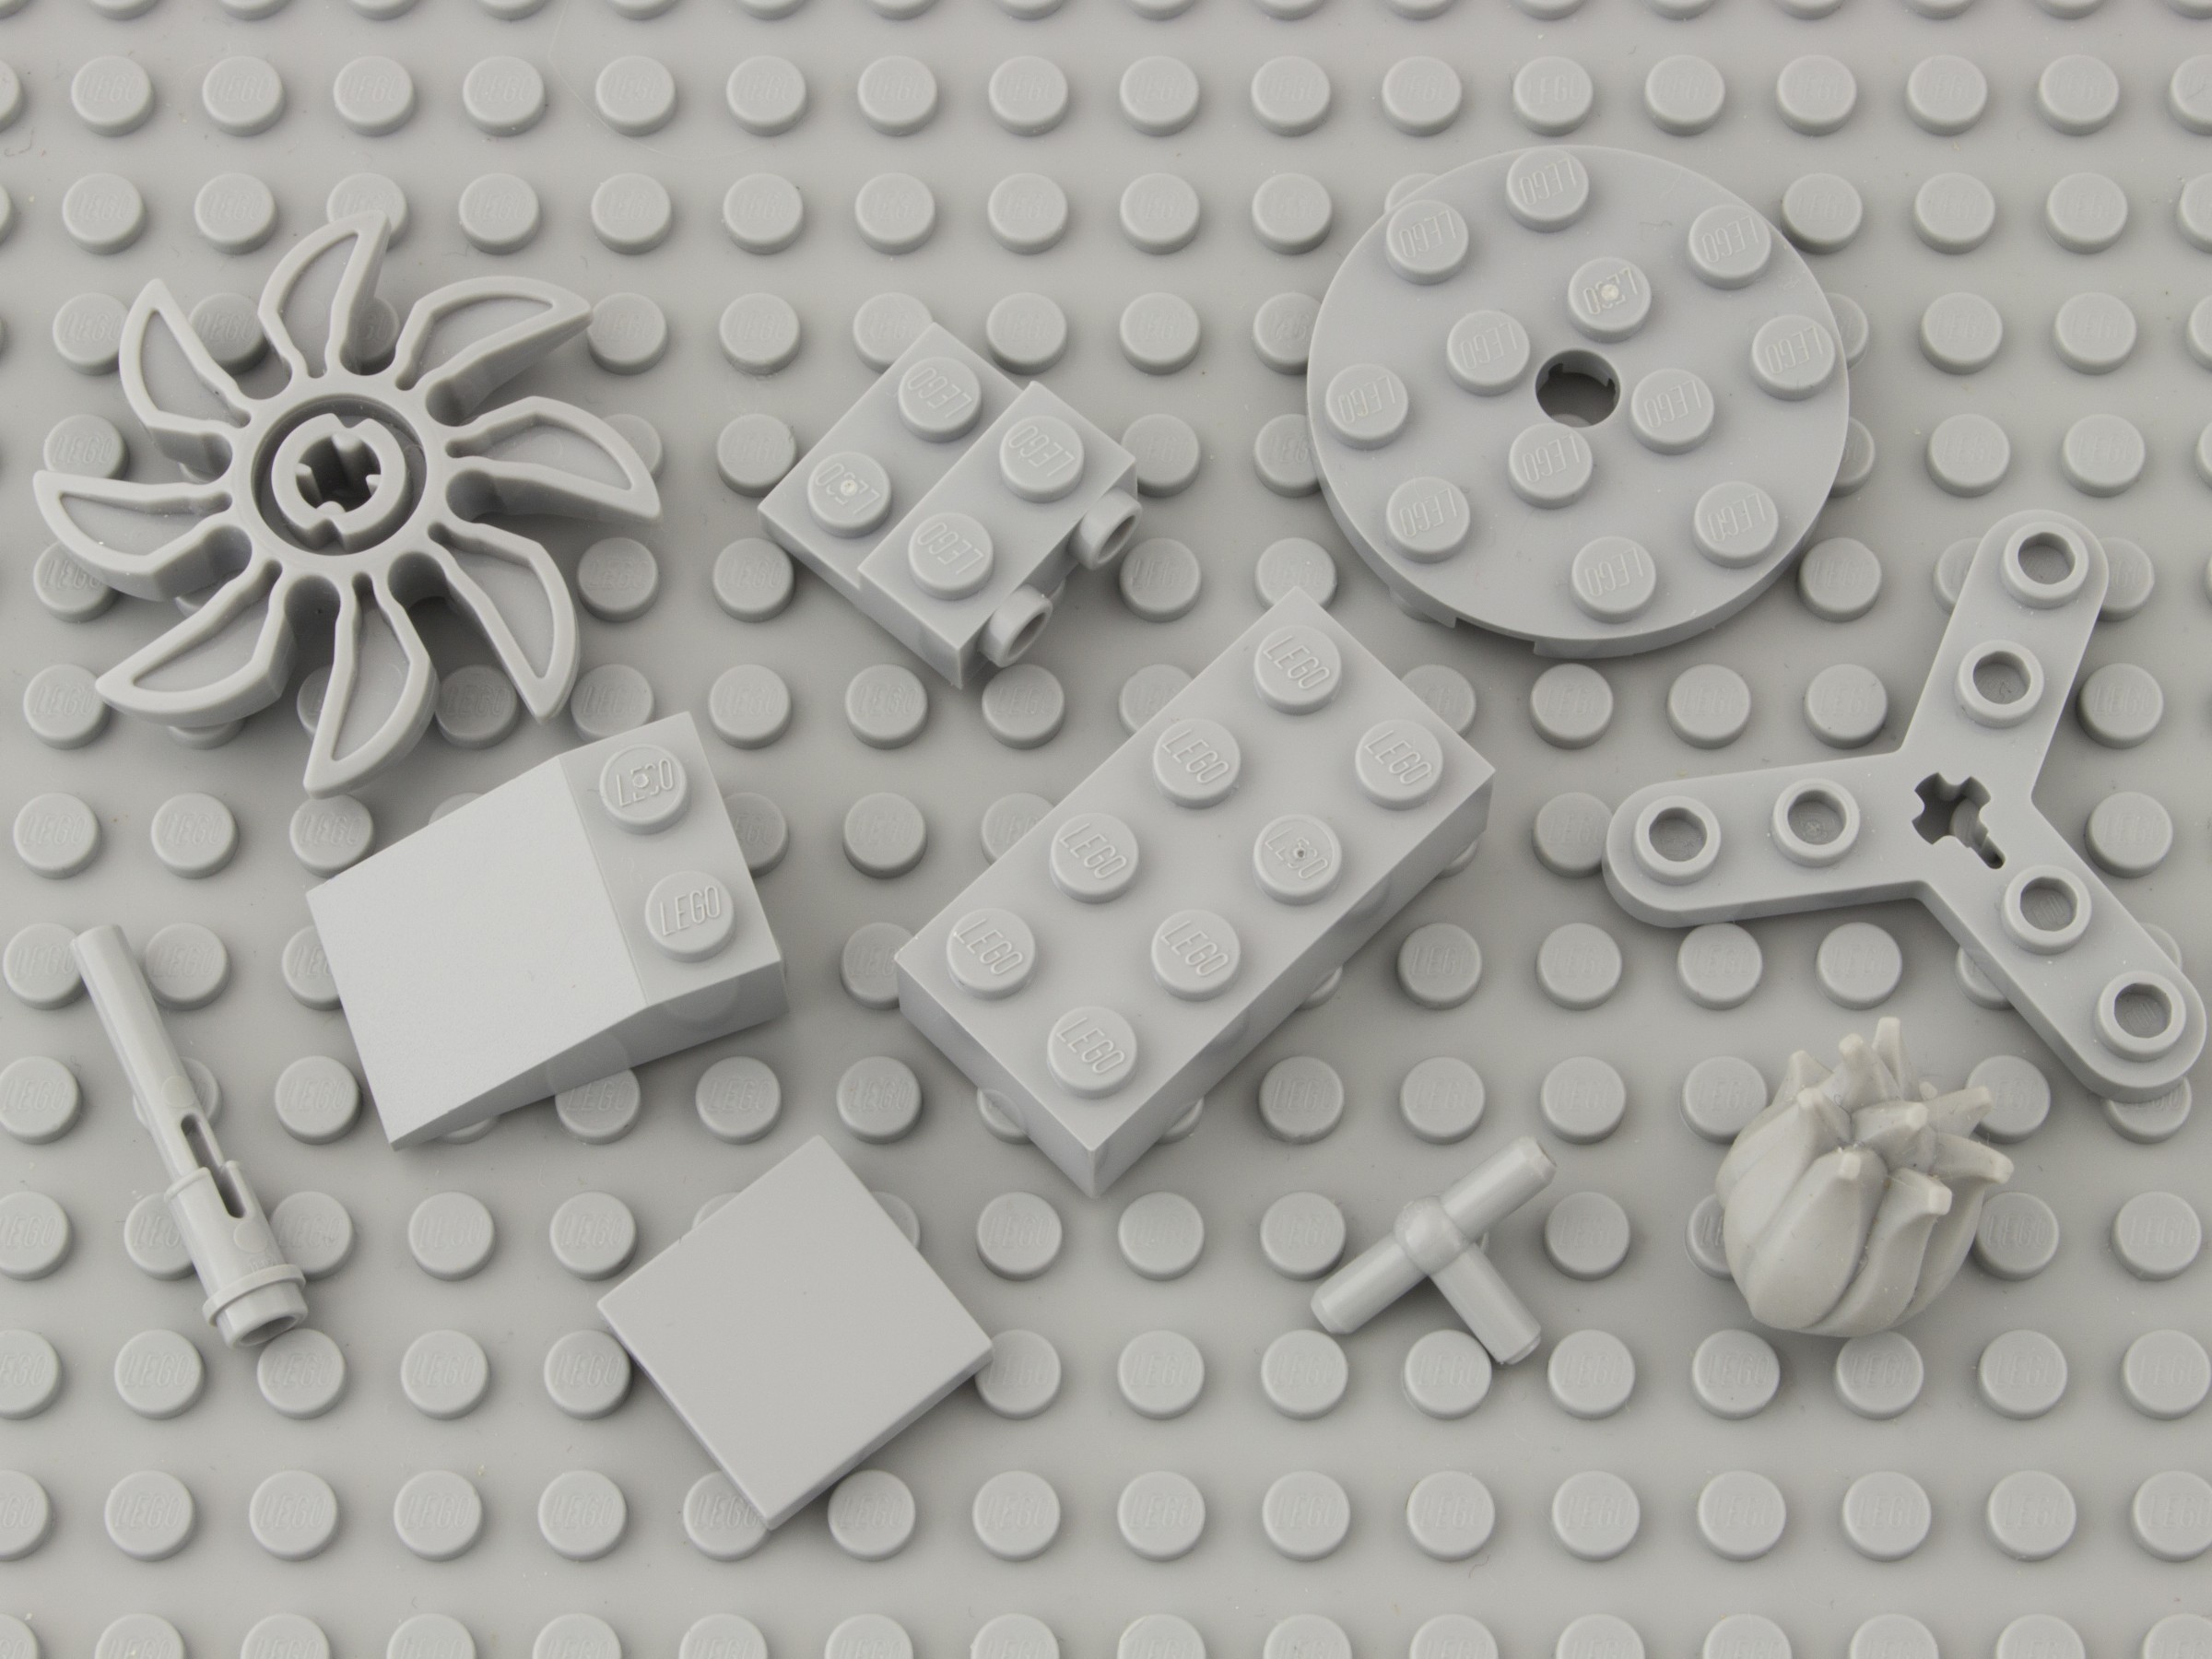 2x6 Brick x20 LEGO Parts and Pieces Light Gray Medium Stone Grey 